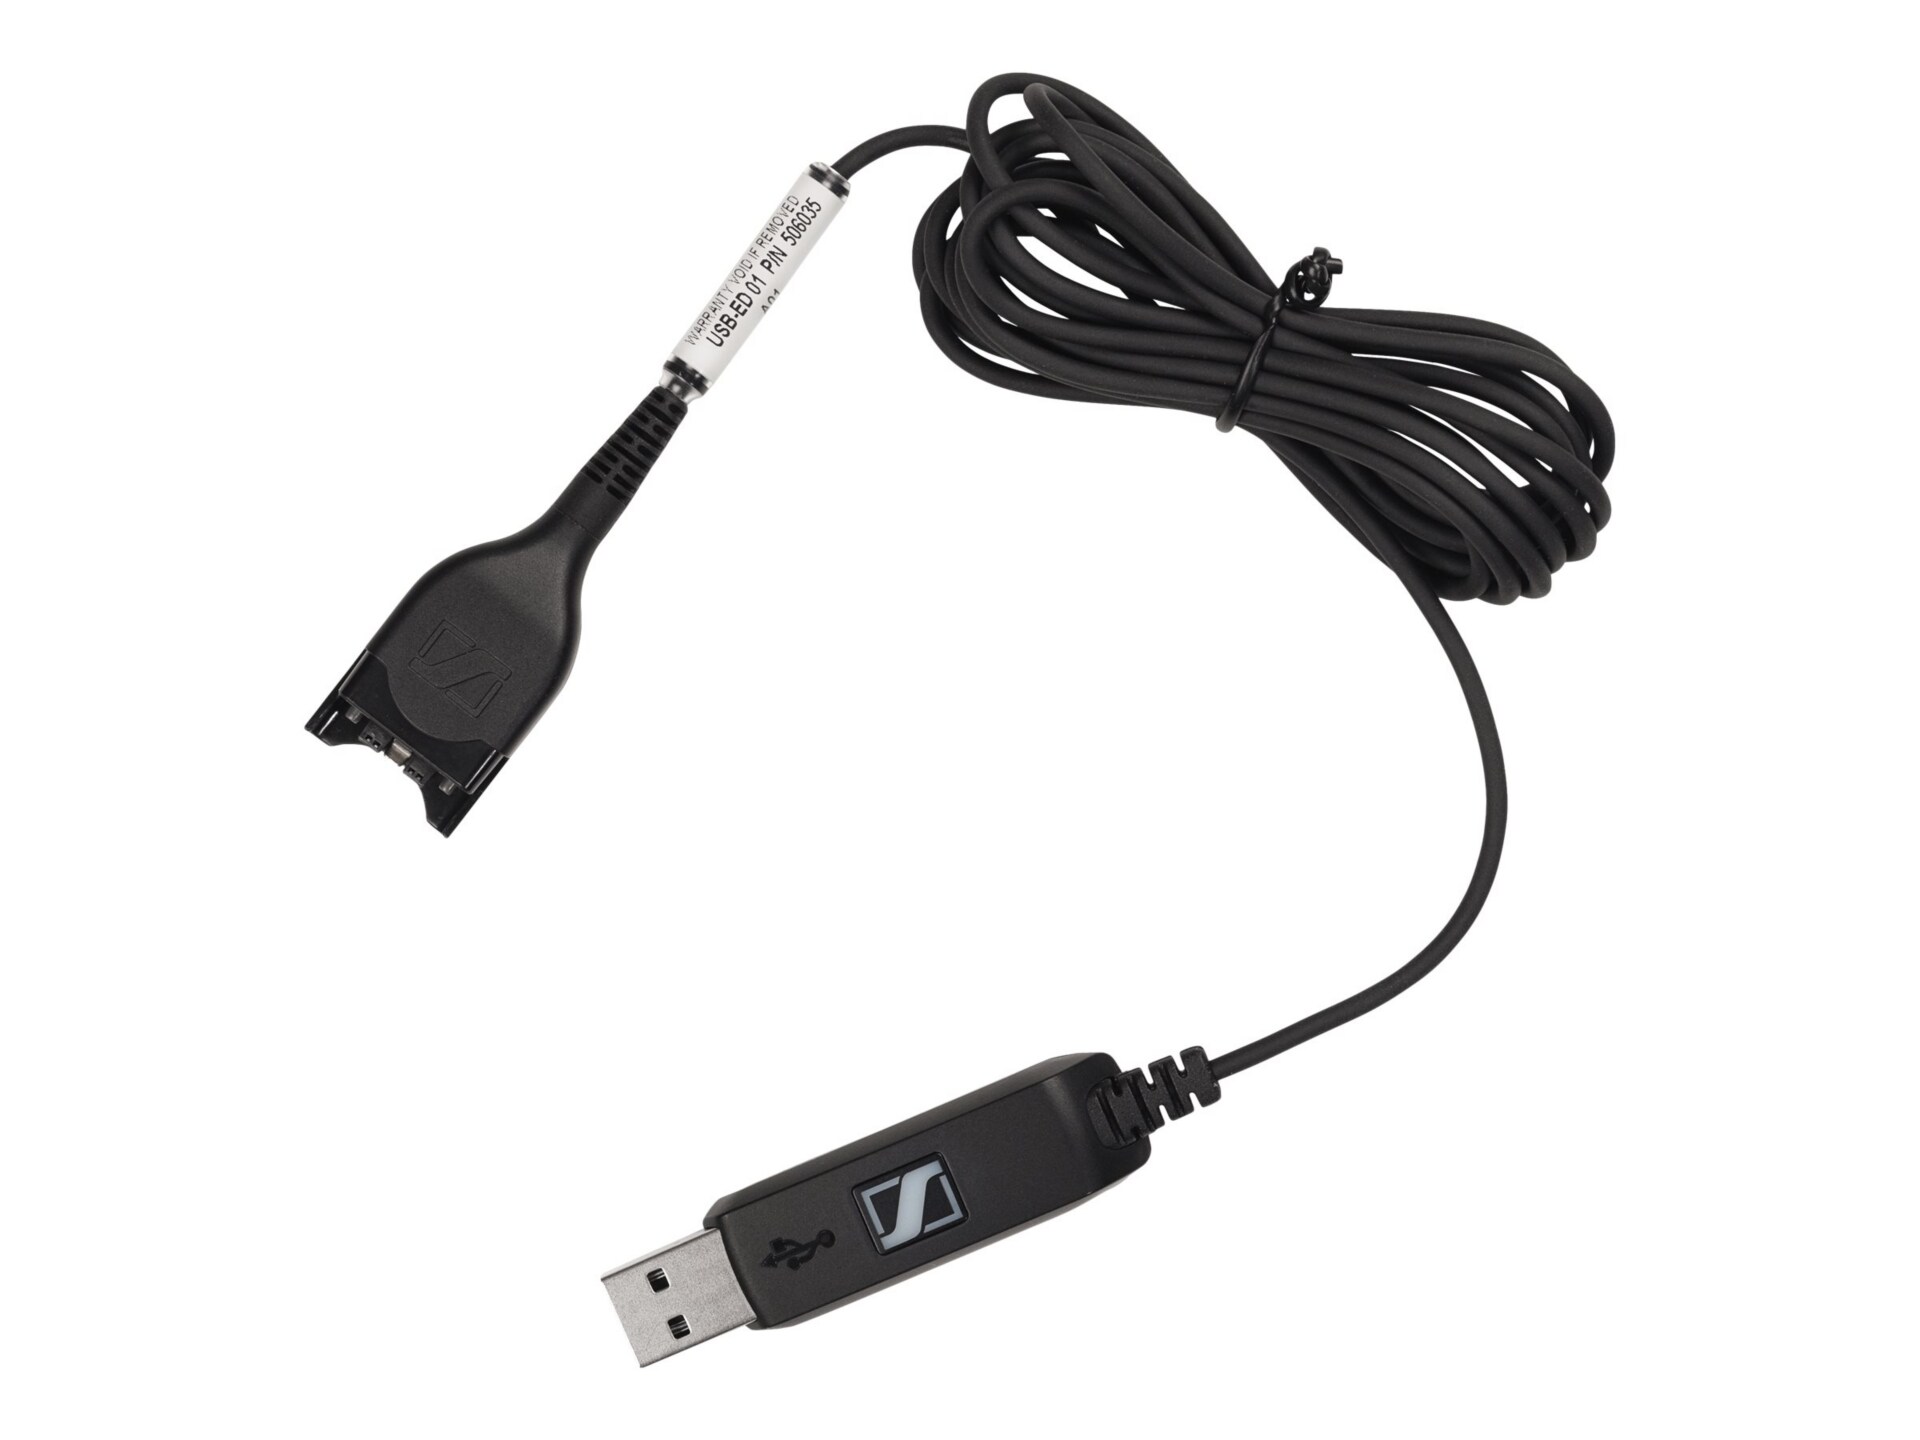 EPOS | SENNHEISER USB-ED 01 - headset cable - 7 ft